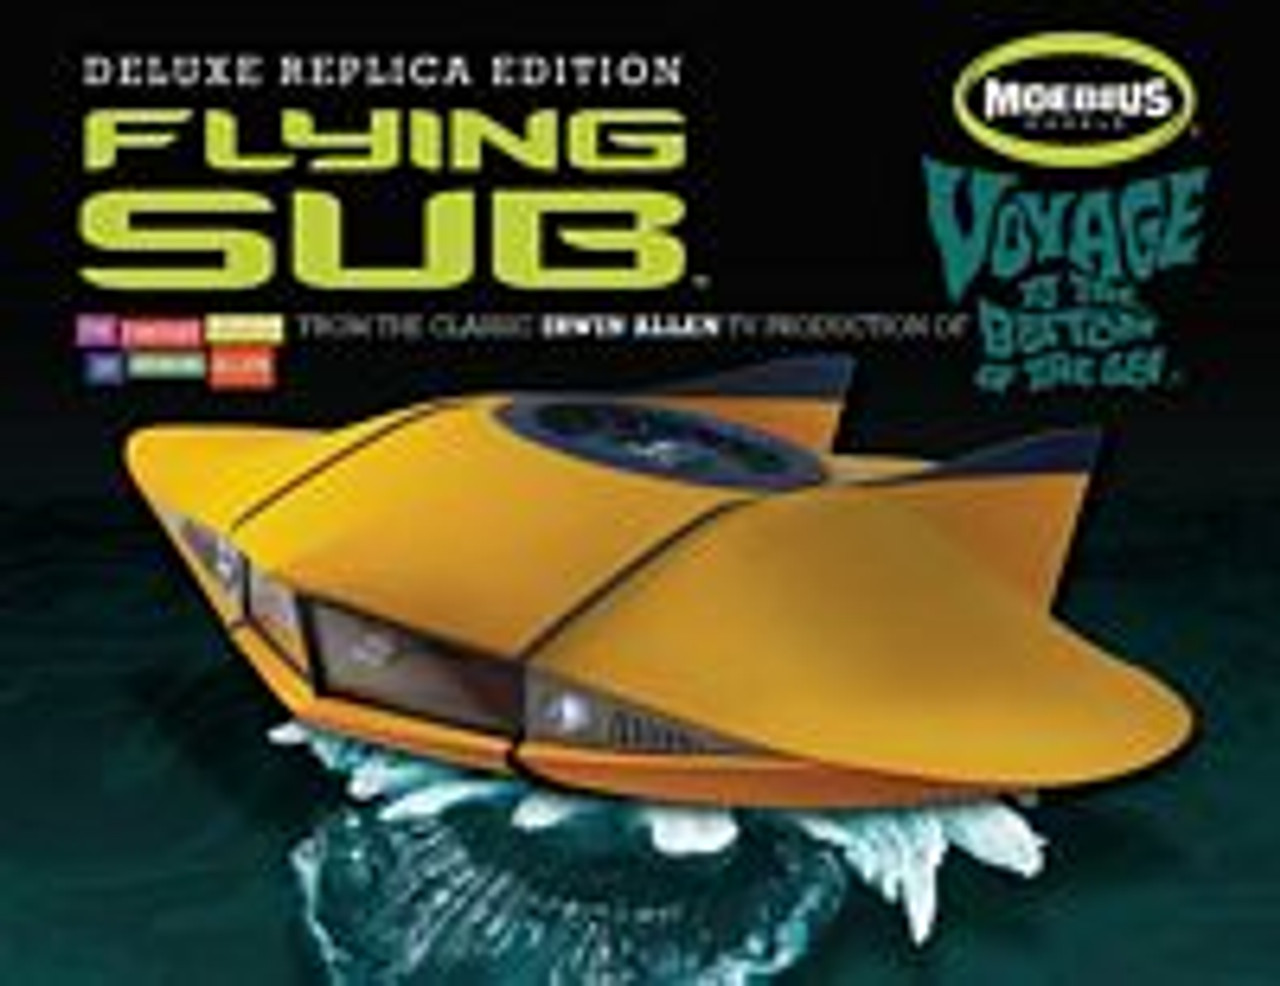 Moebius 2817 1/32 Deluxe Replica Edition Diecast Flying Sub